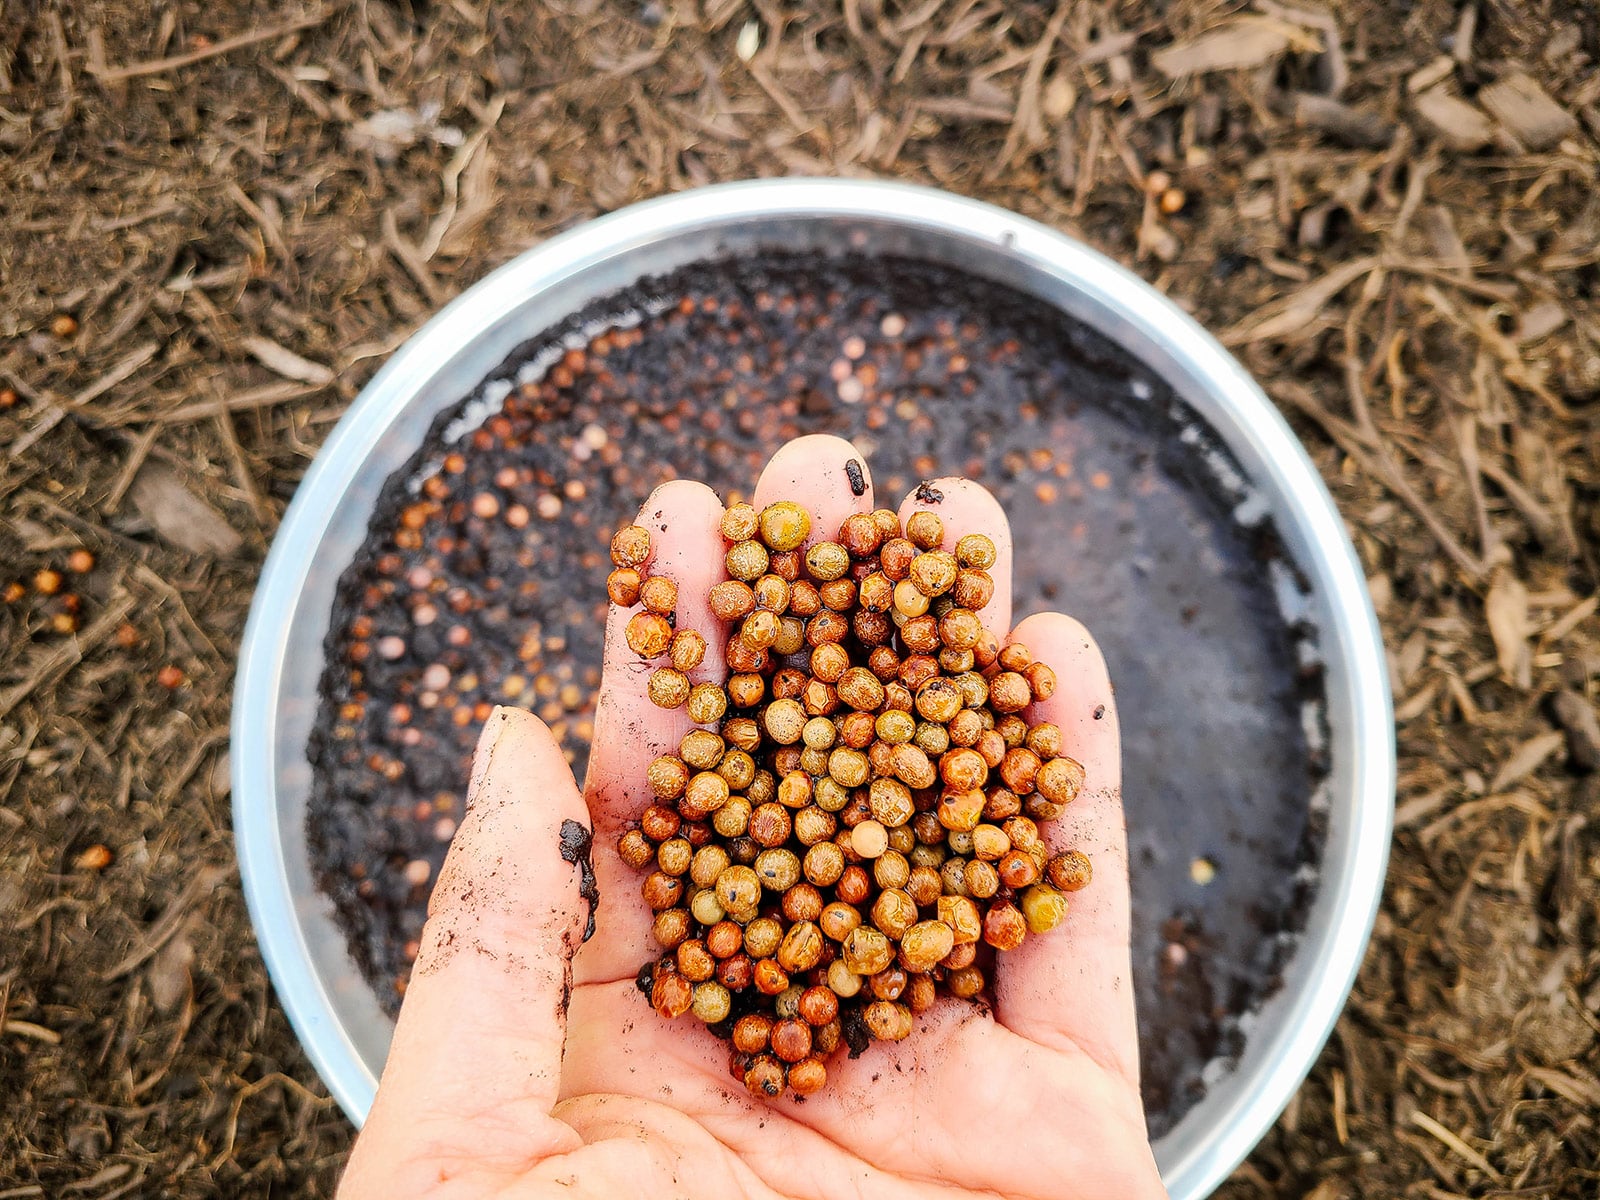 Hand holding inoculated field pea seeds